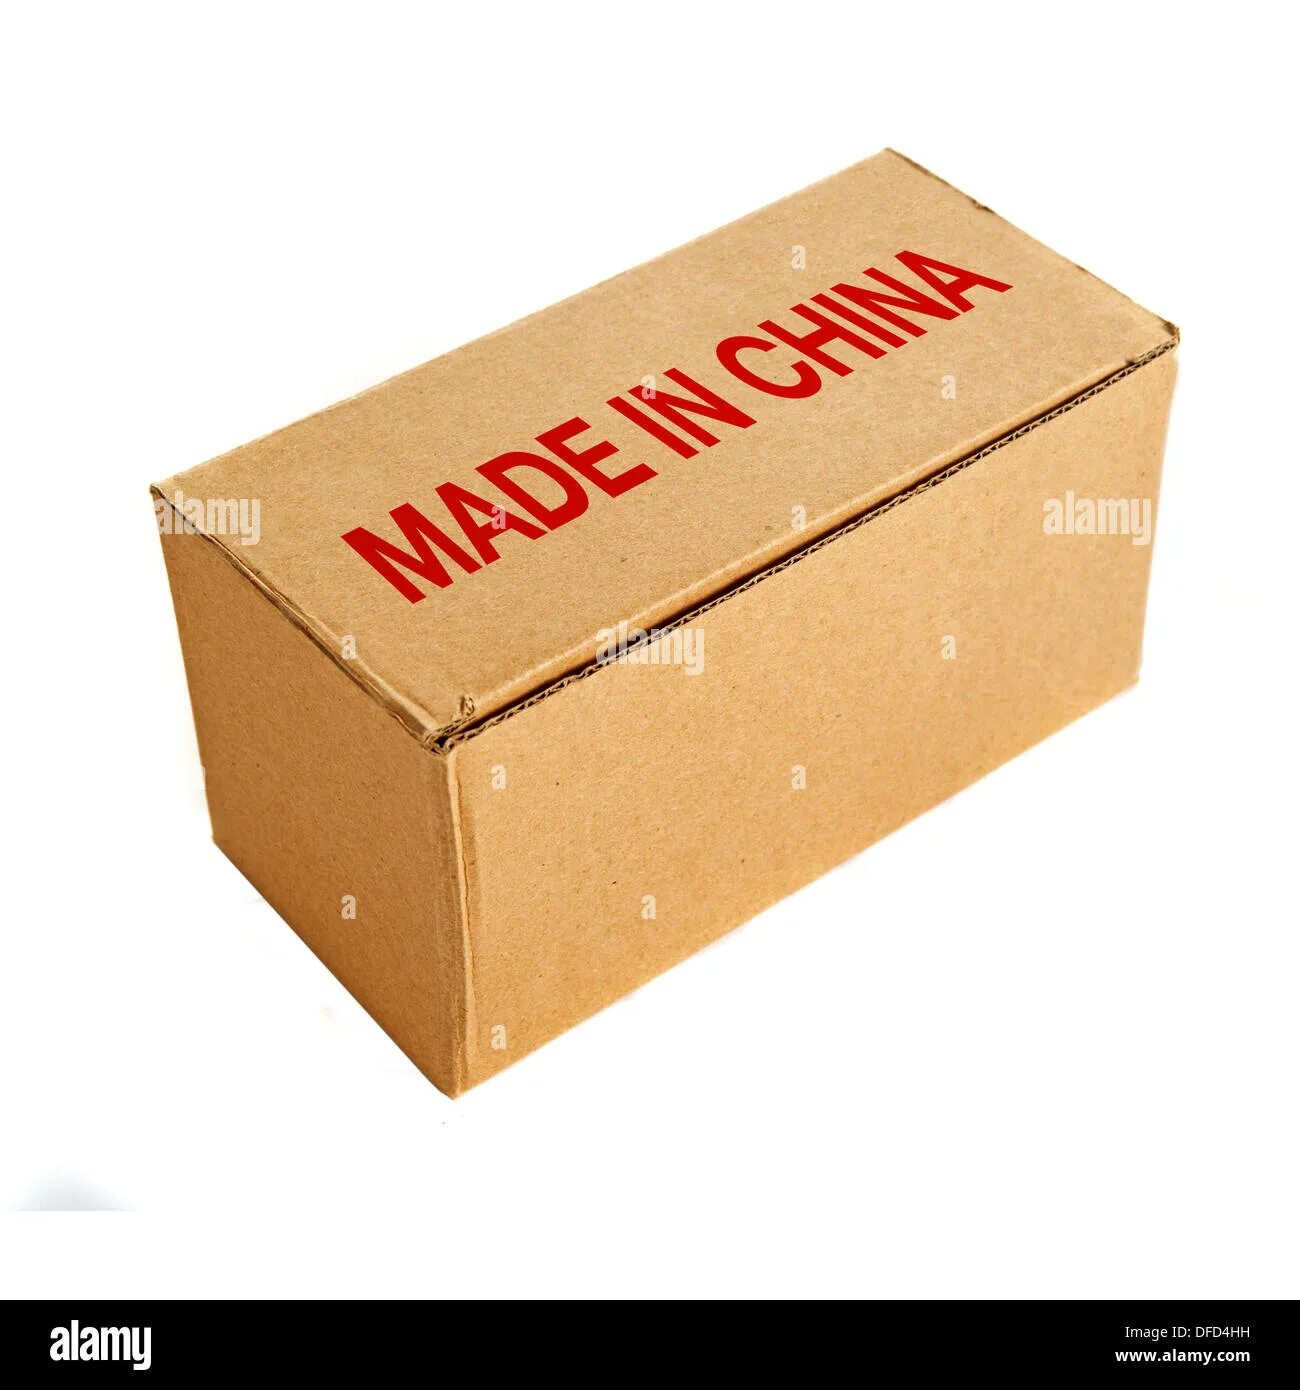 Переведи на китайский коробок. Коробка made in China. Made in China на упаковке. Китаец в коробке. Первая картонная коробка в Китае.